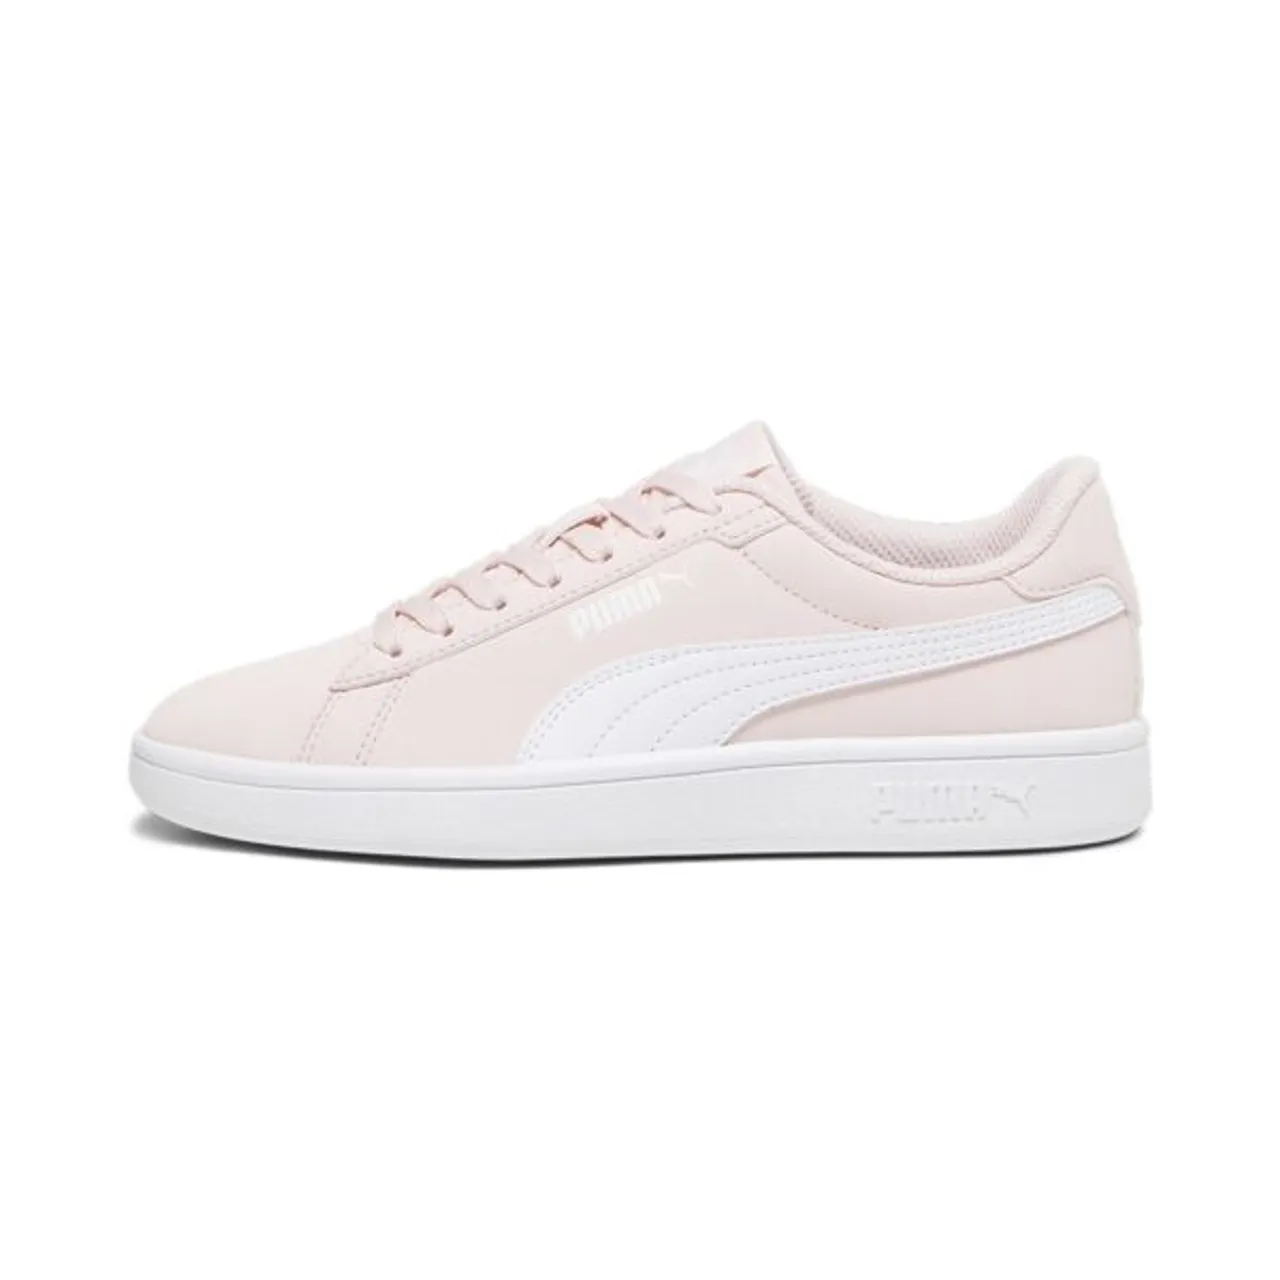 Sneaker PUMA "Smash 3.0 Buck Sneakers Jugendliche" Gr. 37, pink (frosty white) Kinder Schuhe